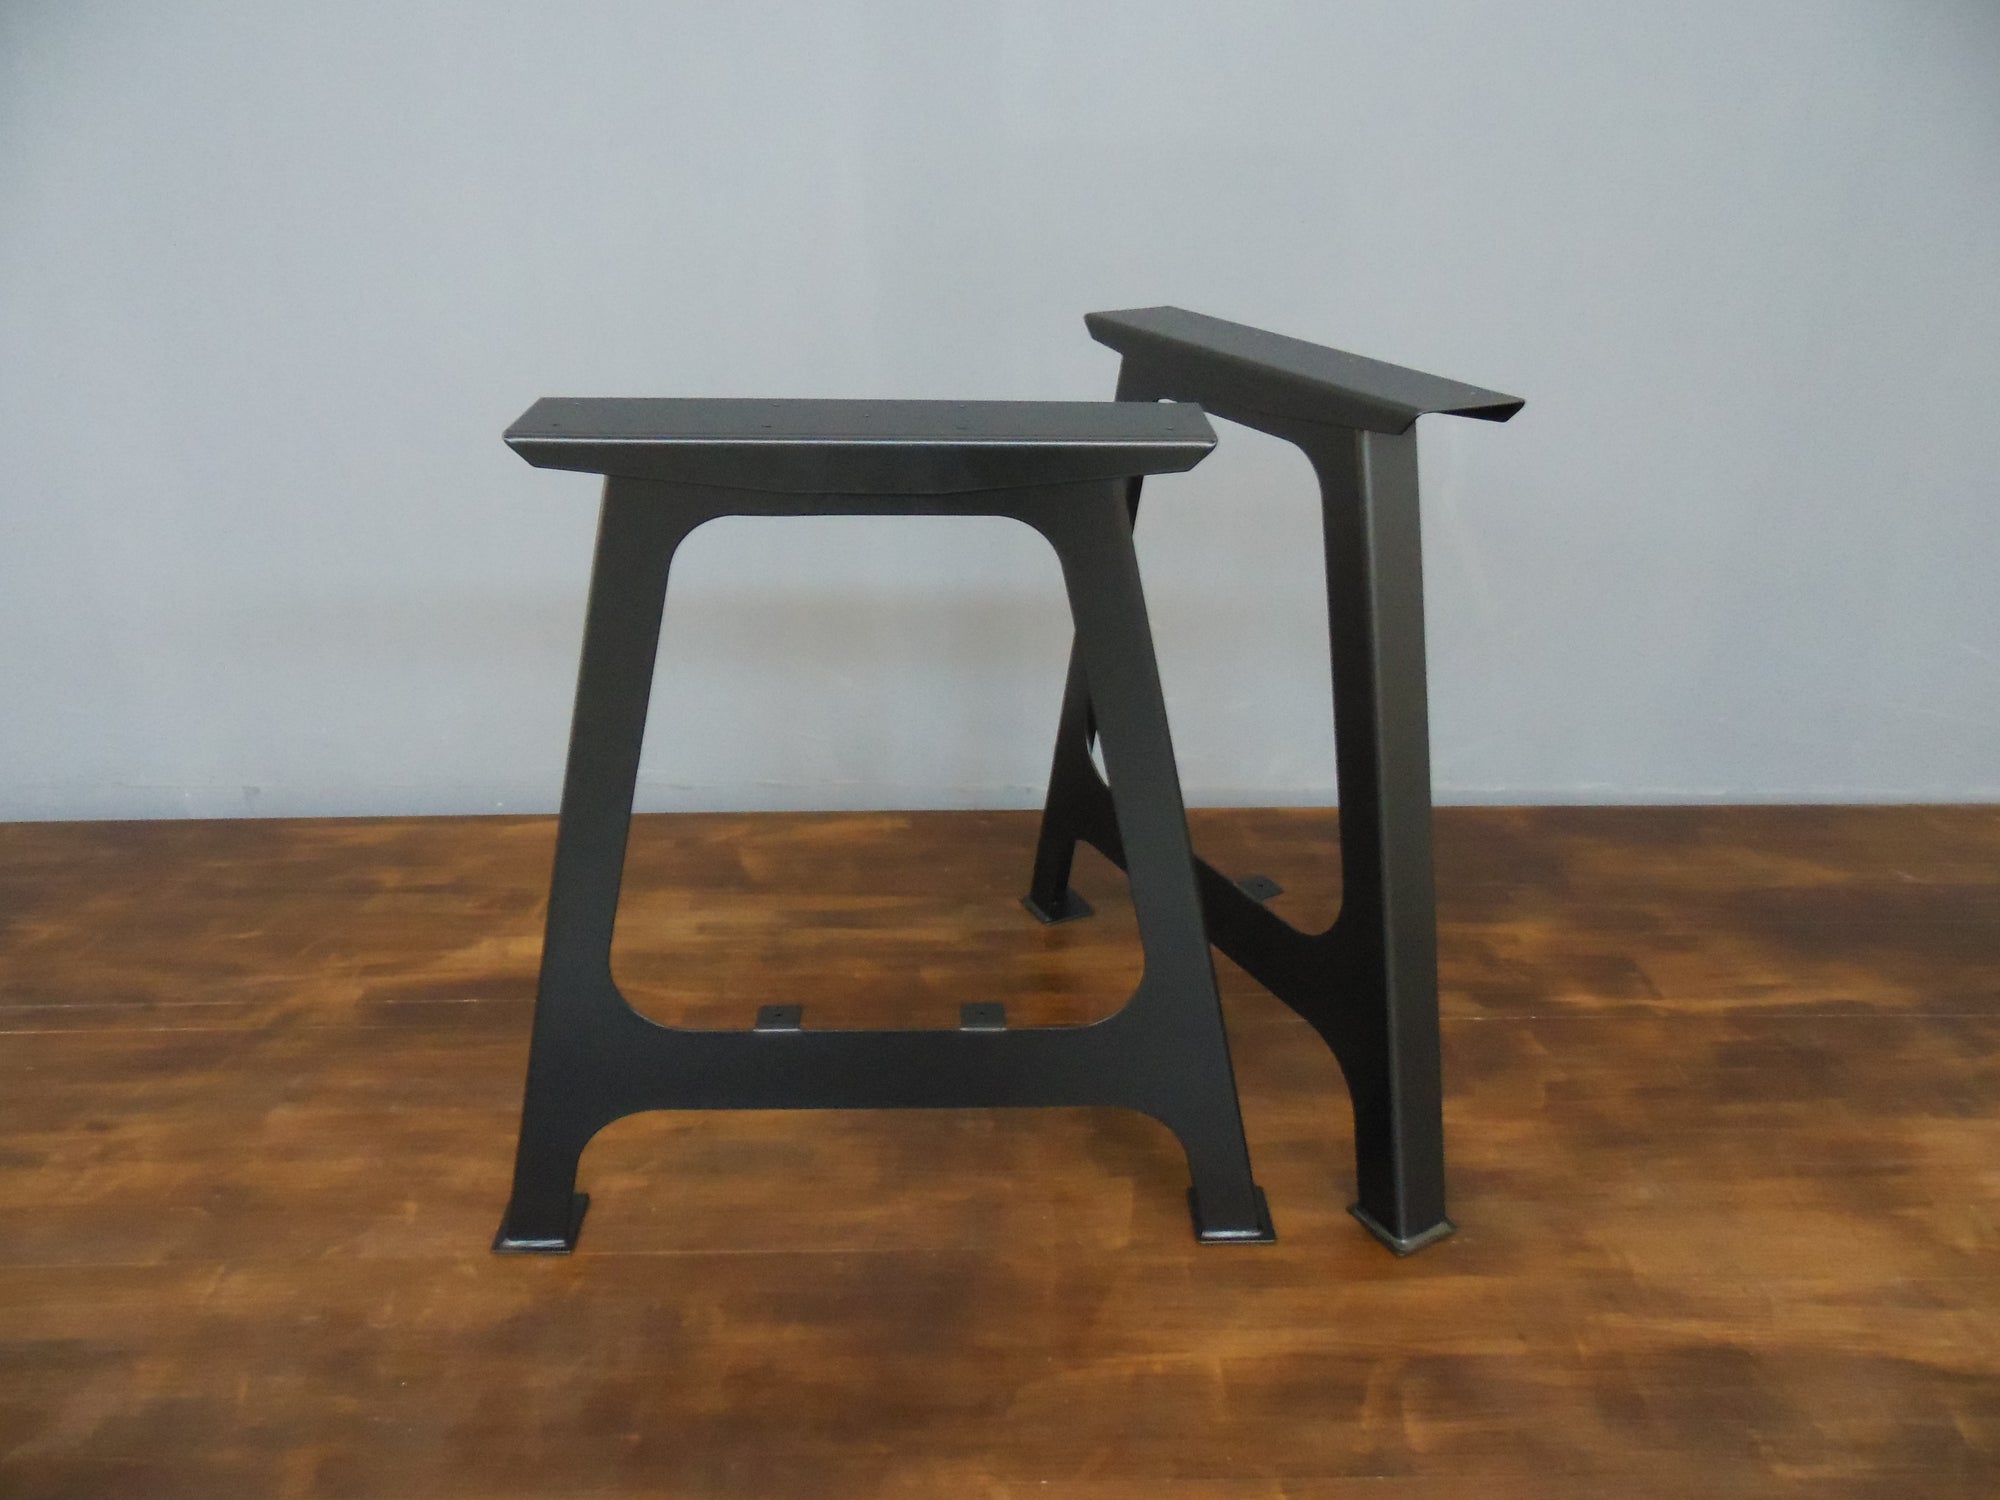 28" A Frame Industrial Table Legs For Desks